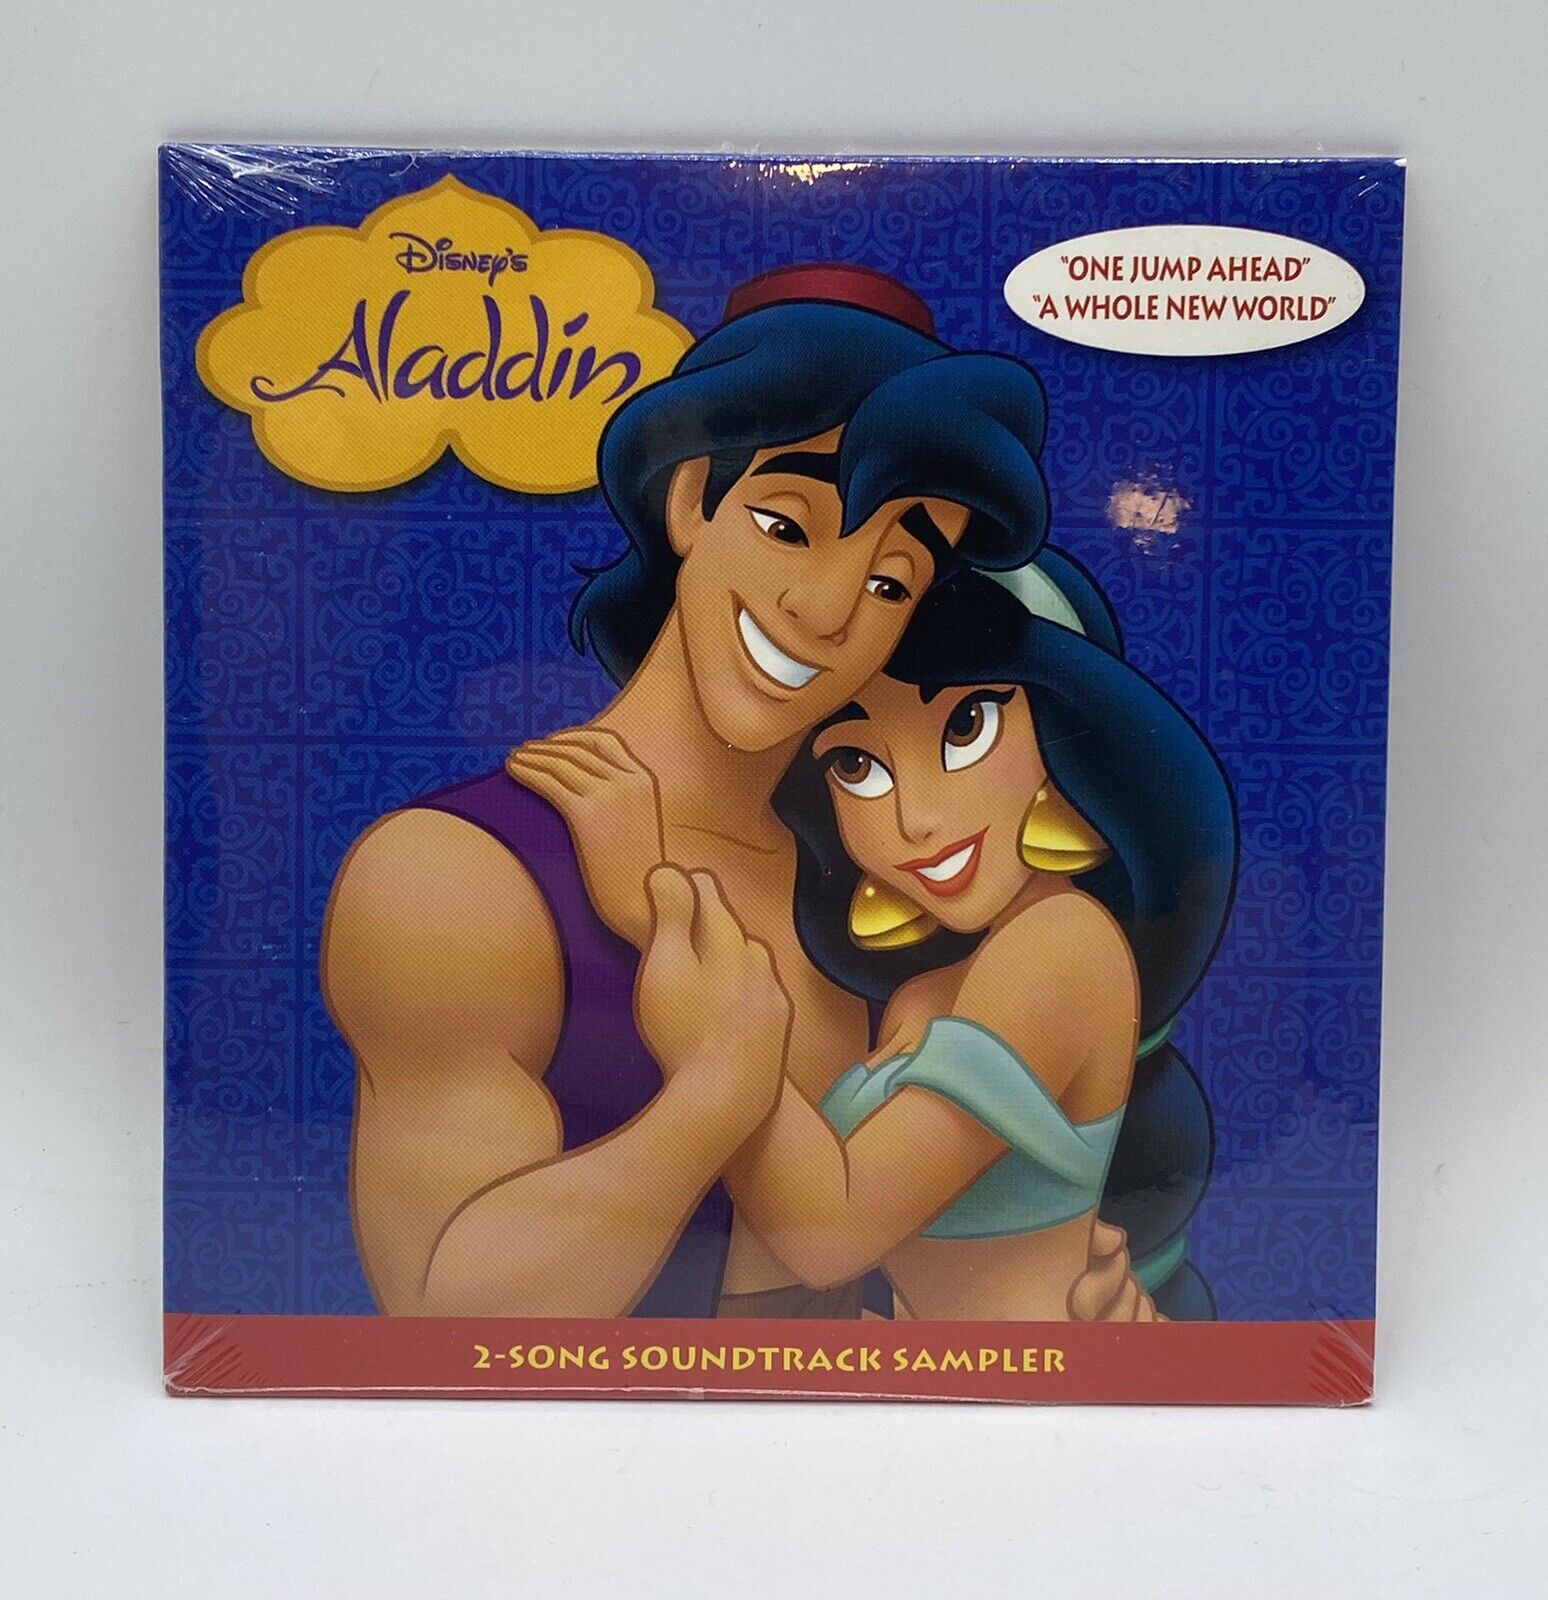 Disney's Aladdin 2-Song Soundtrack Sampler (Jump Ahead & New World) New Sealed